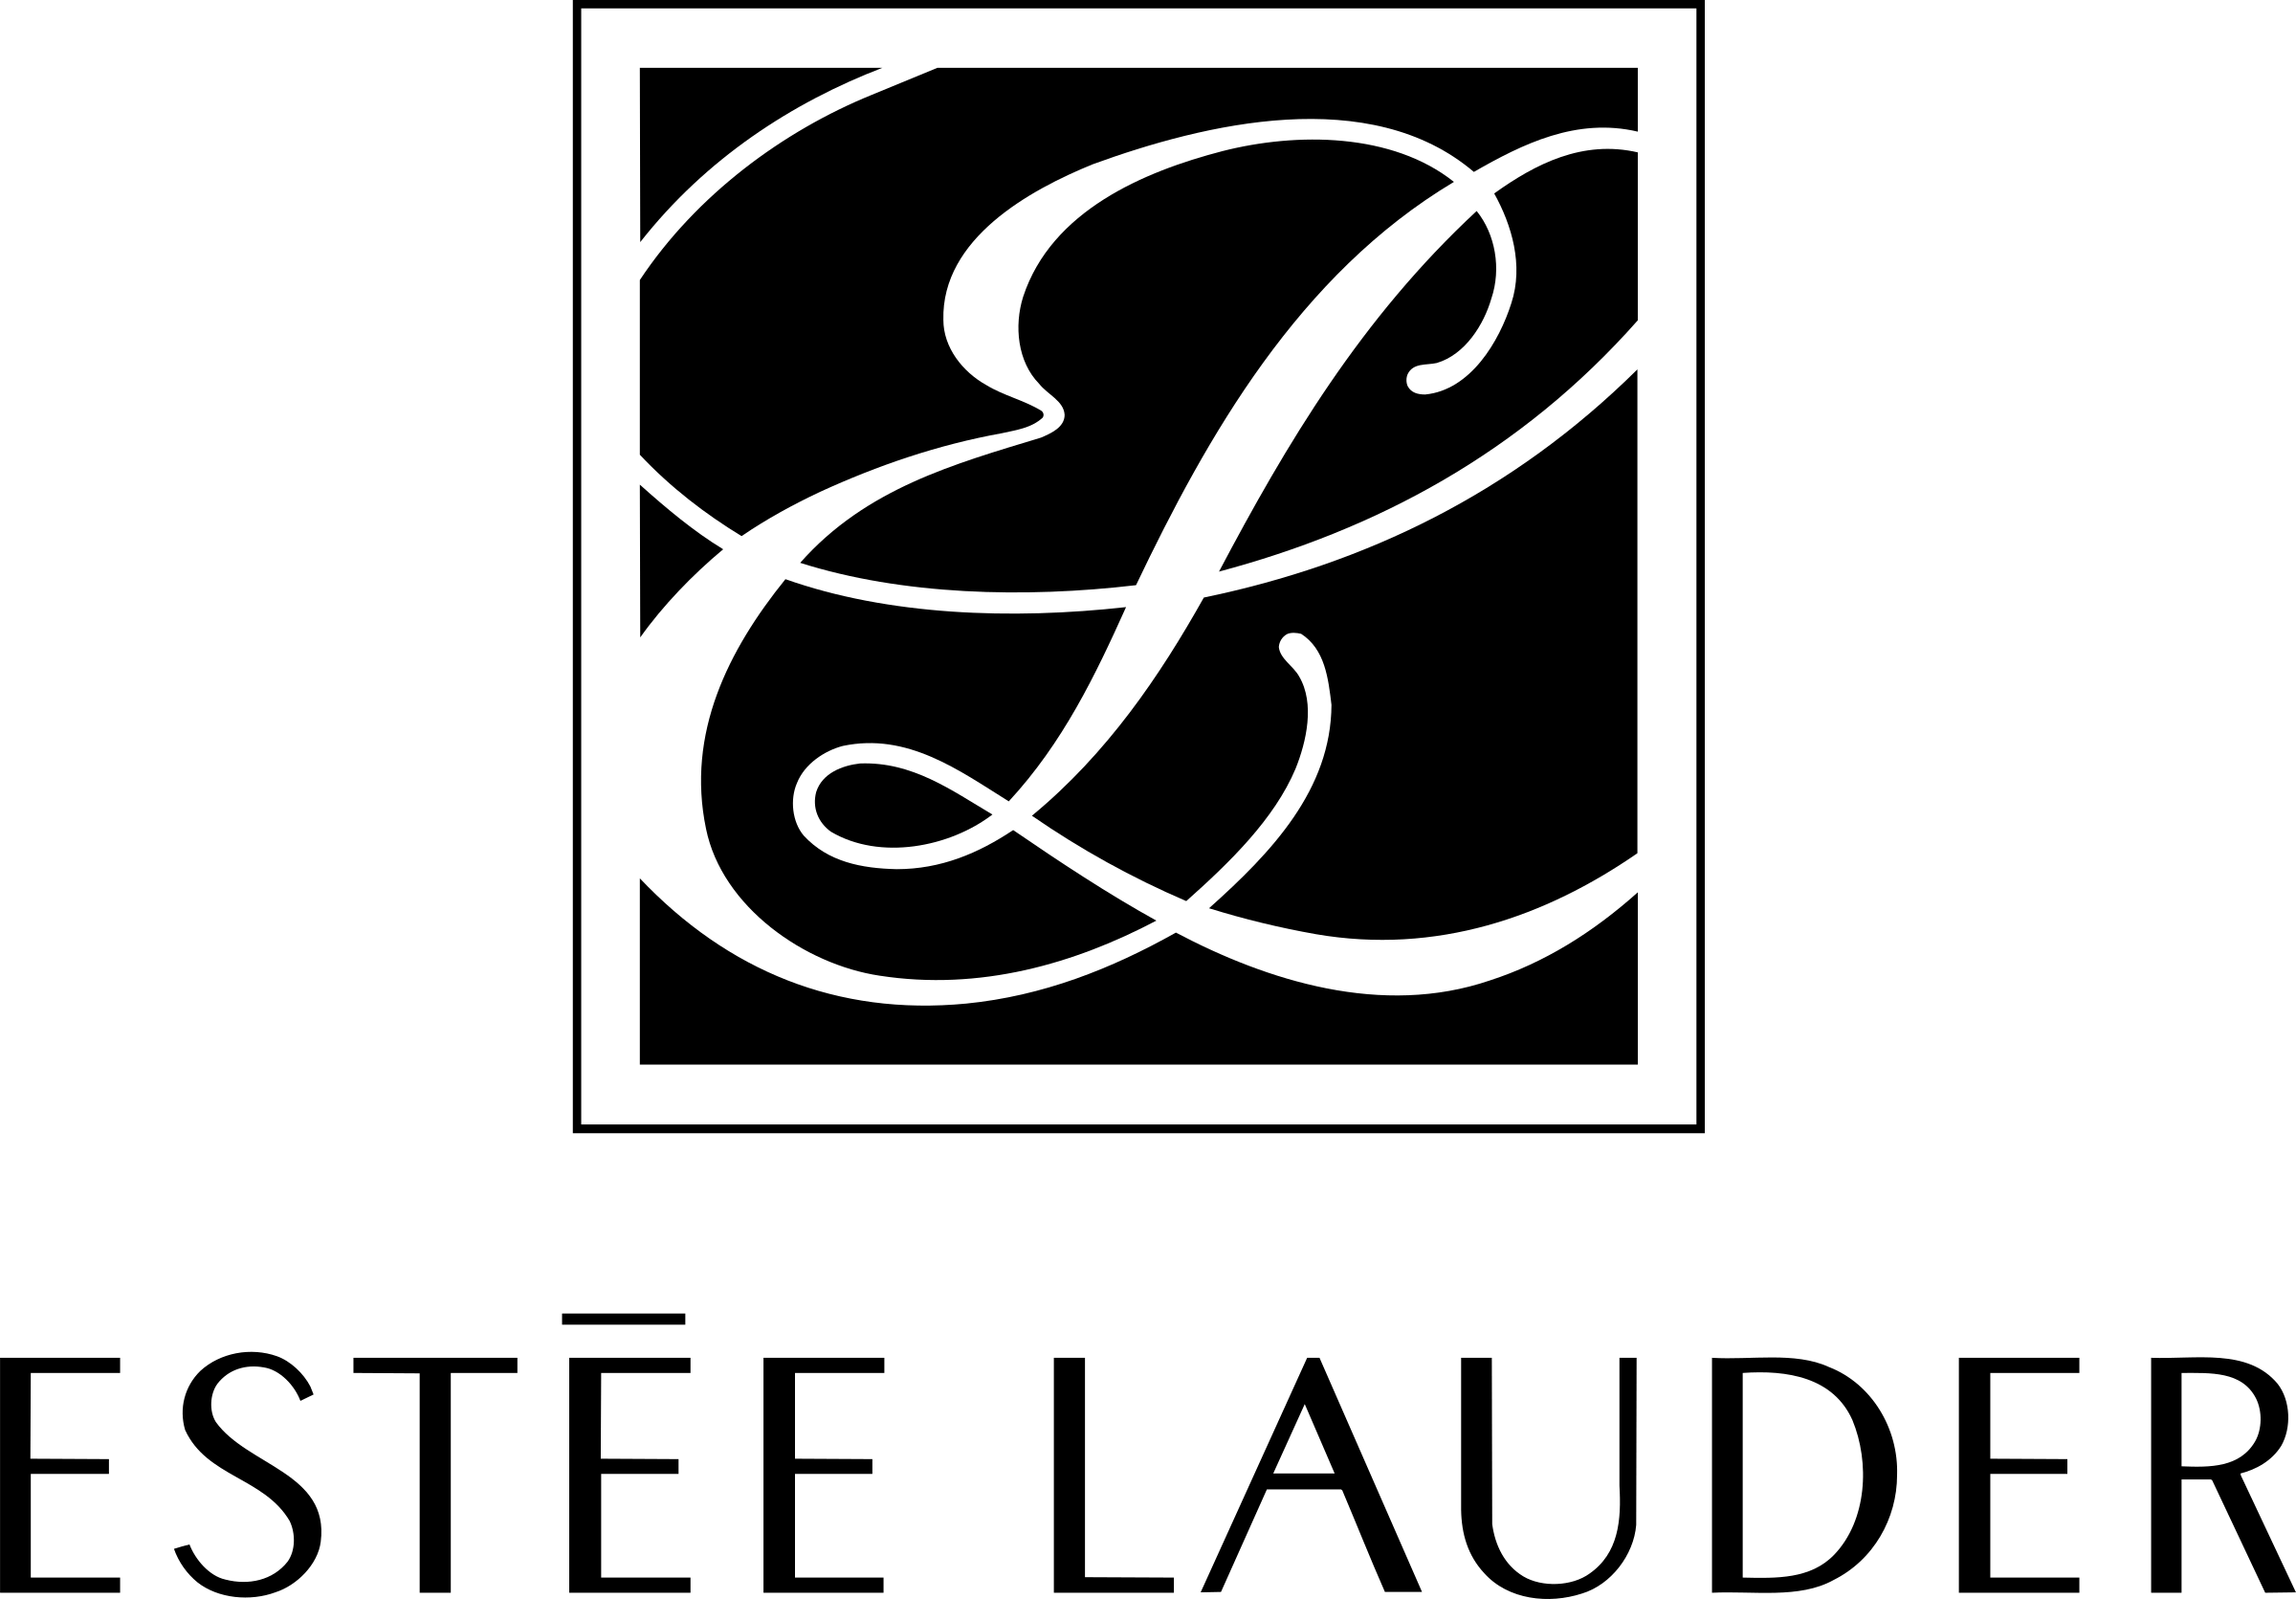 Lauder Logo - ESTEE LAUDER 2 Logo PNG Transparent & SVG Vector